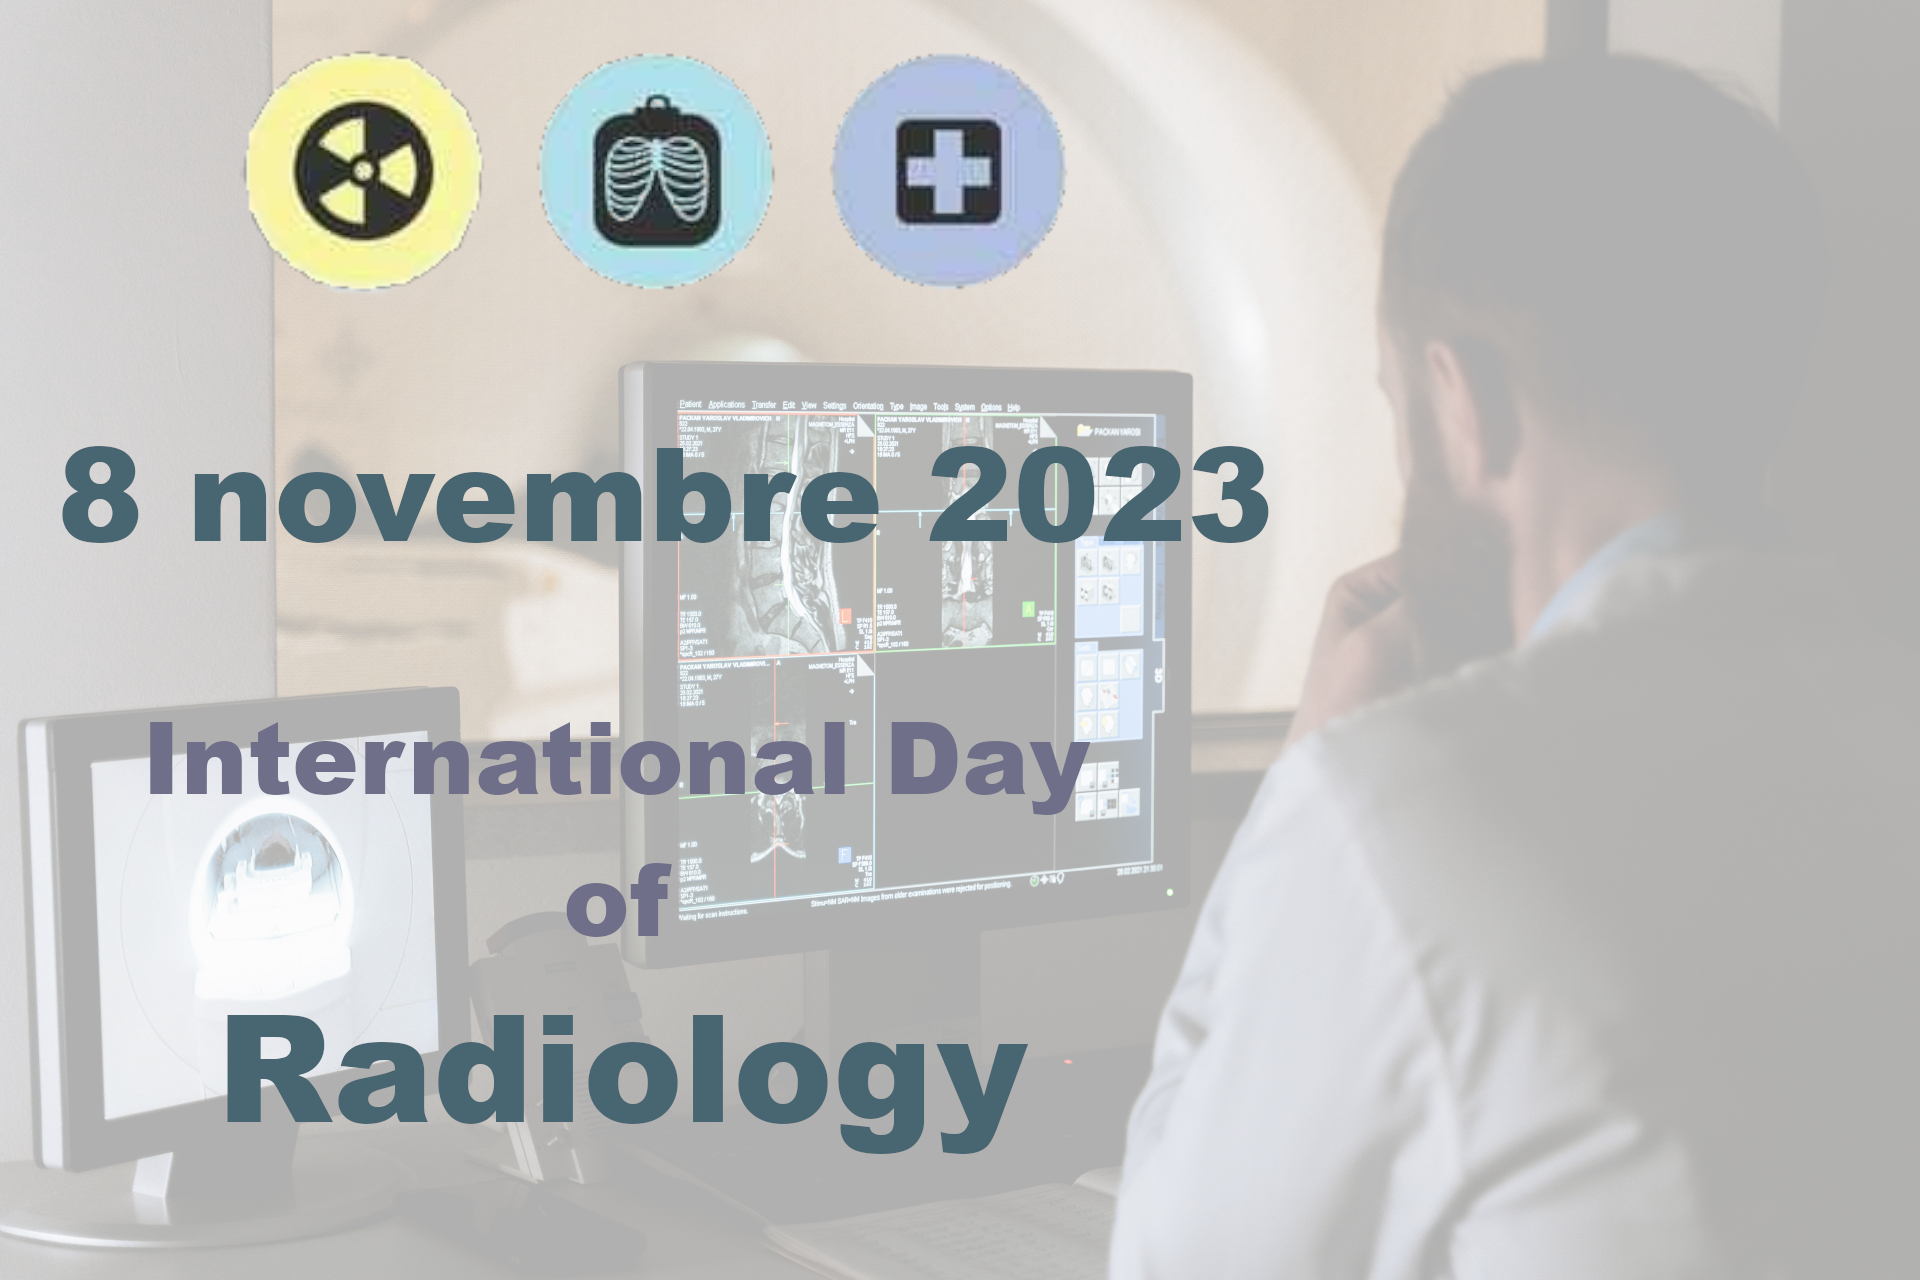 International Day of Radiology - 8 novembre 2023